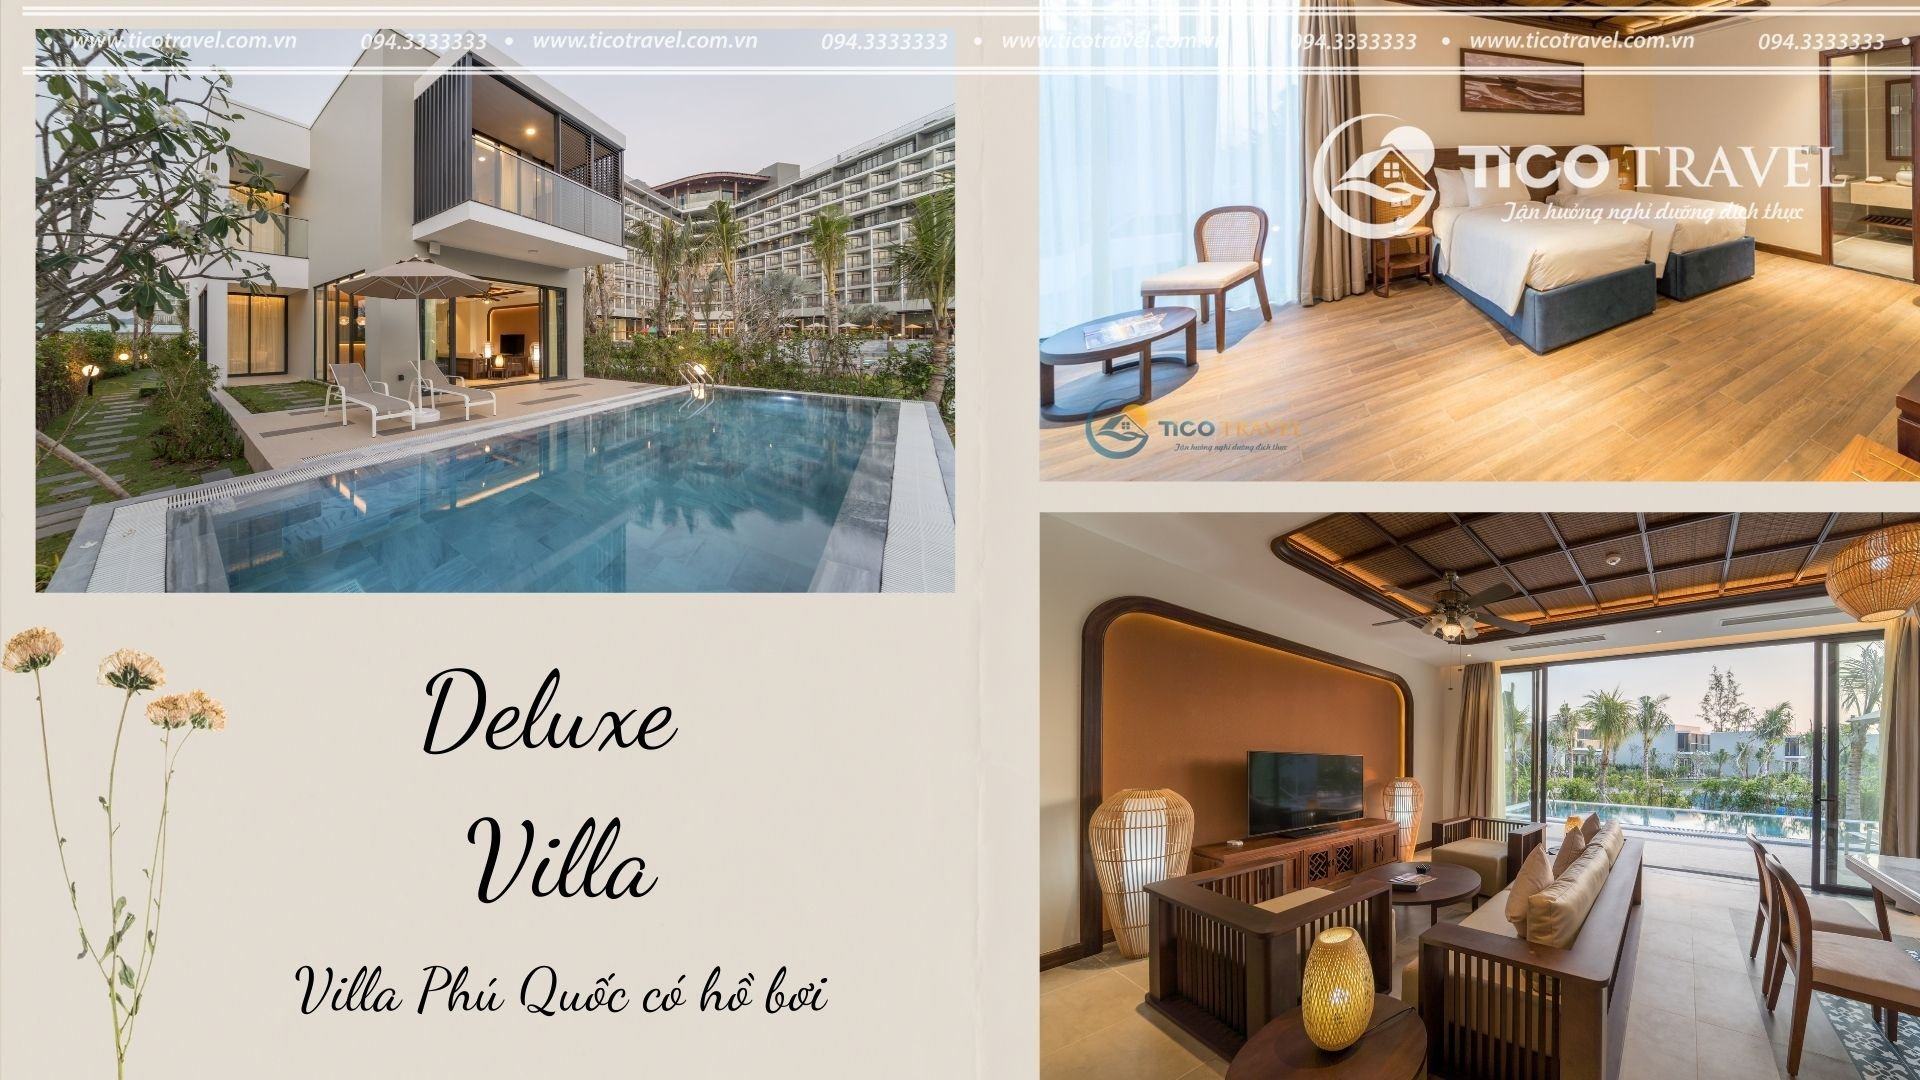 Deluxe villa Phu Quoc